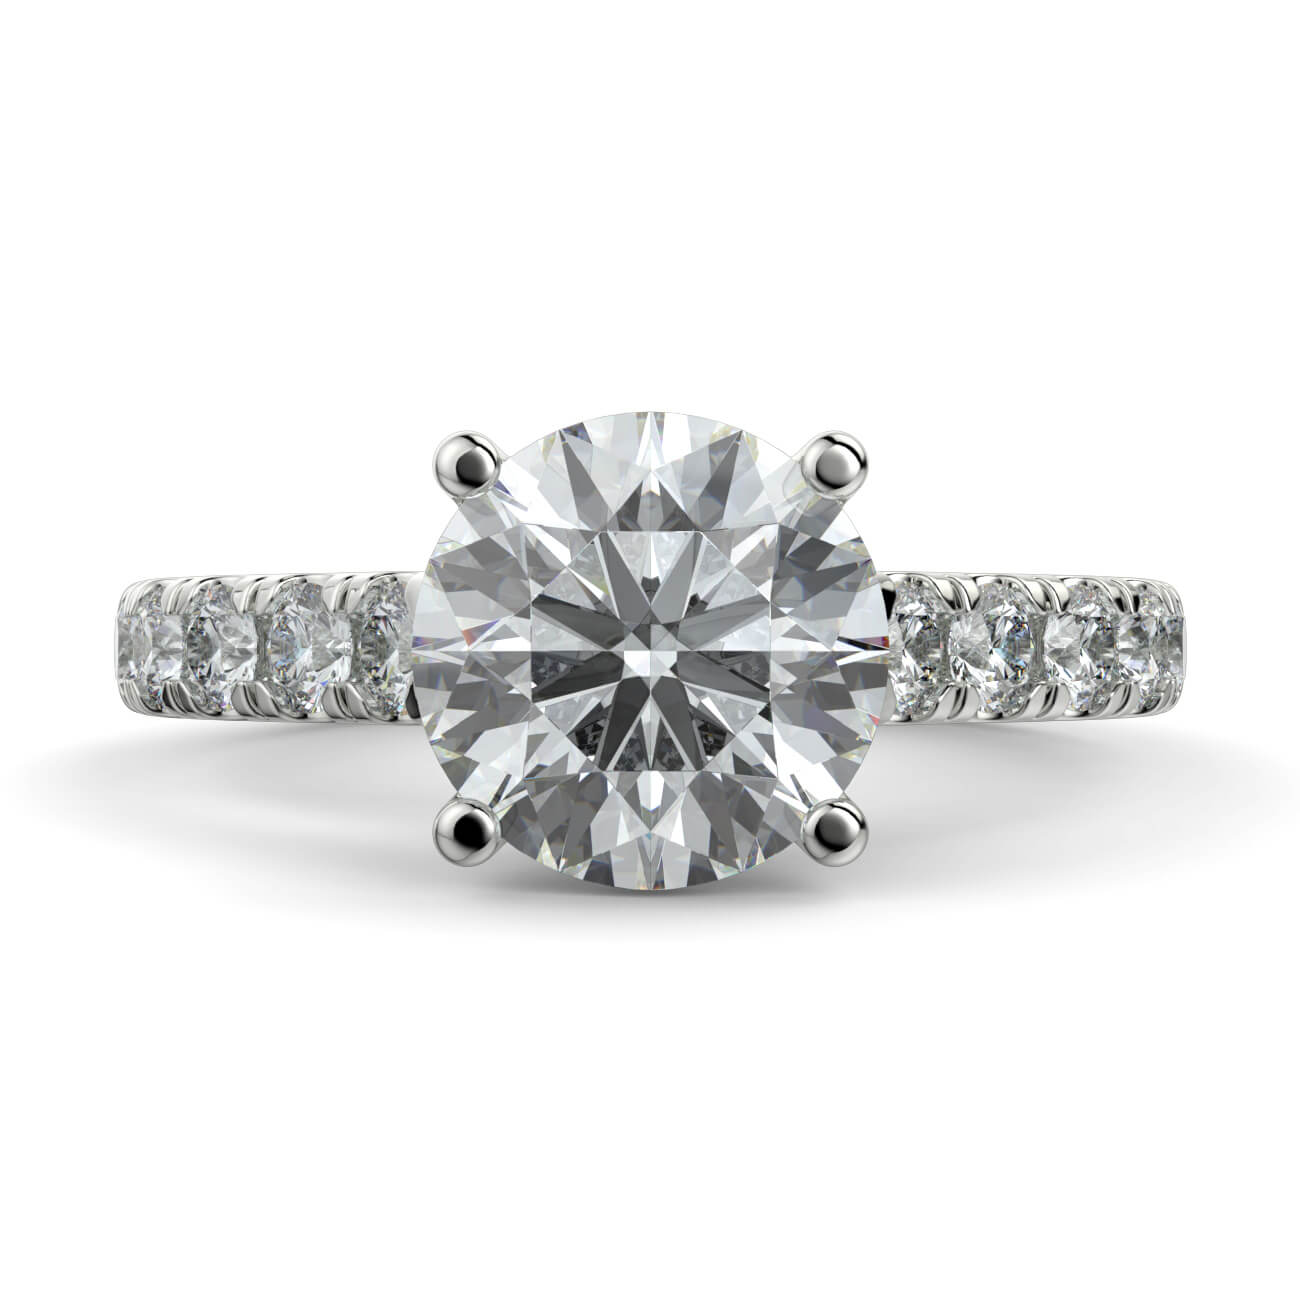 Round Brilliant Cut Diamond Engagement Ring In 18k White Gold – Australian Diamond Network